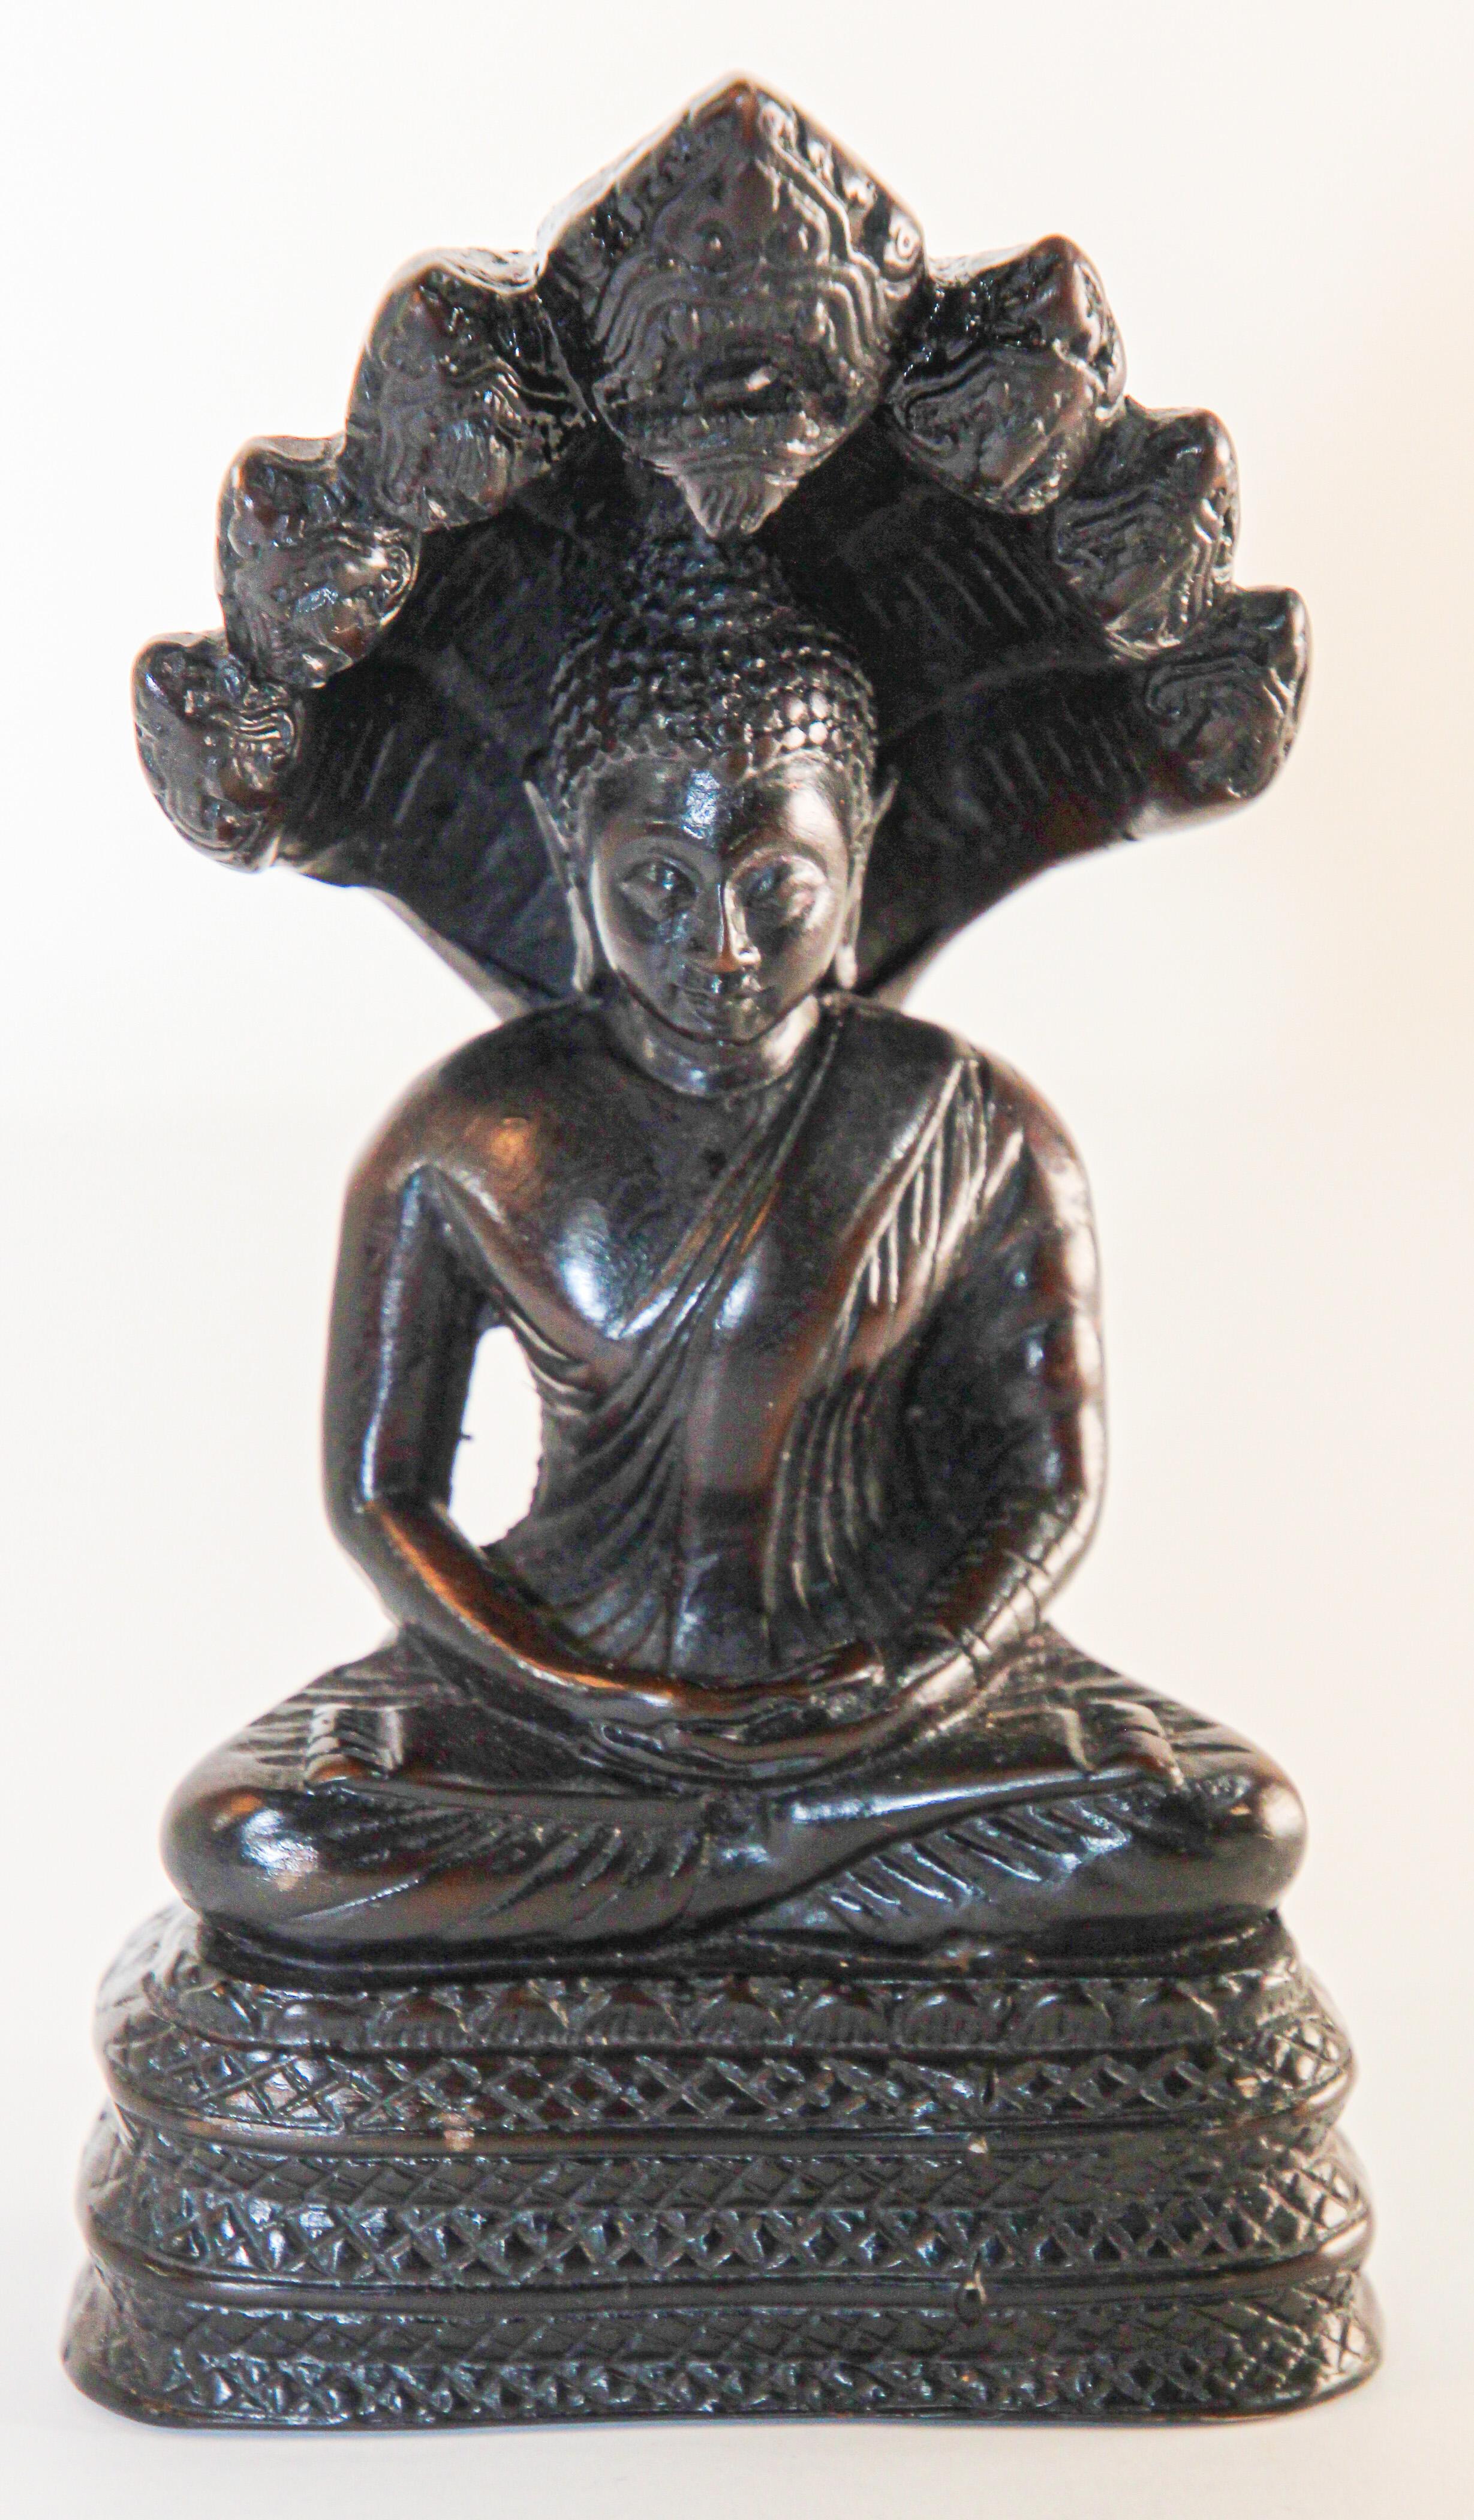 Rosewood Buddha - 8 For Sale on 1stDibs